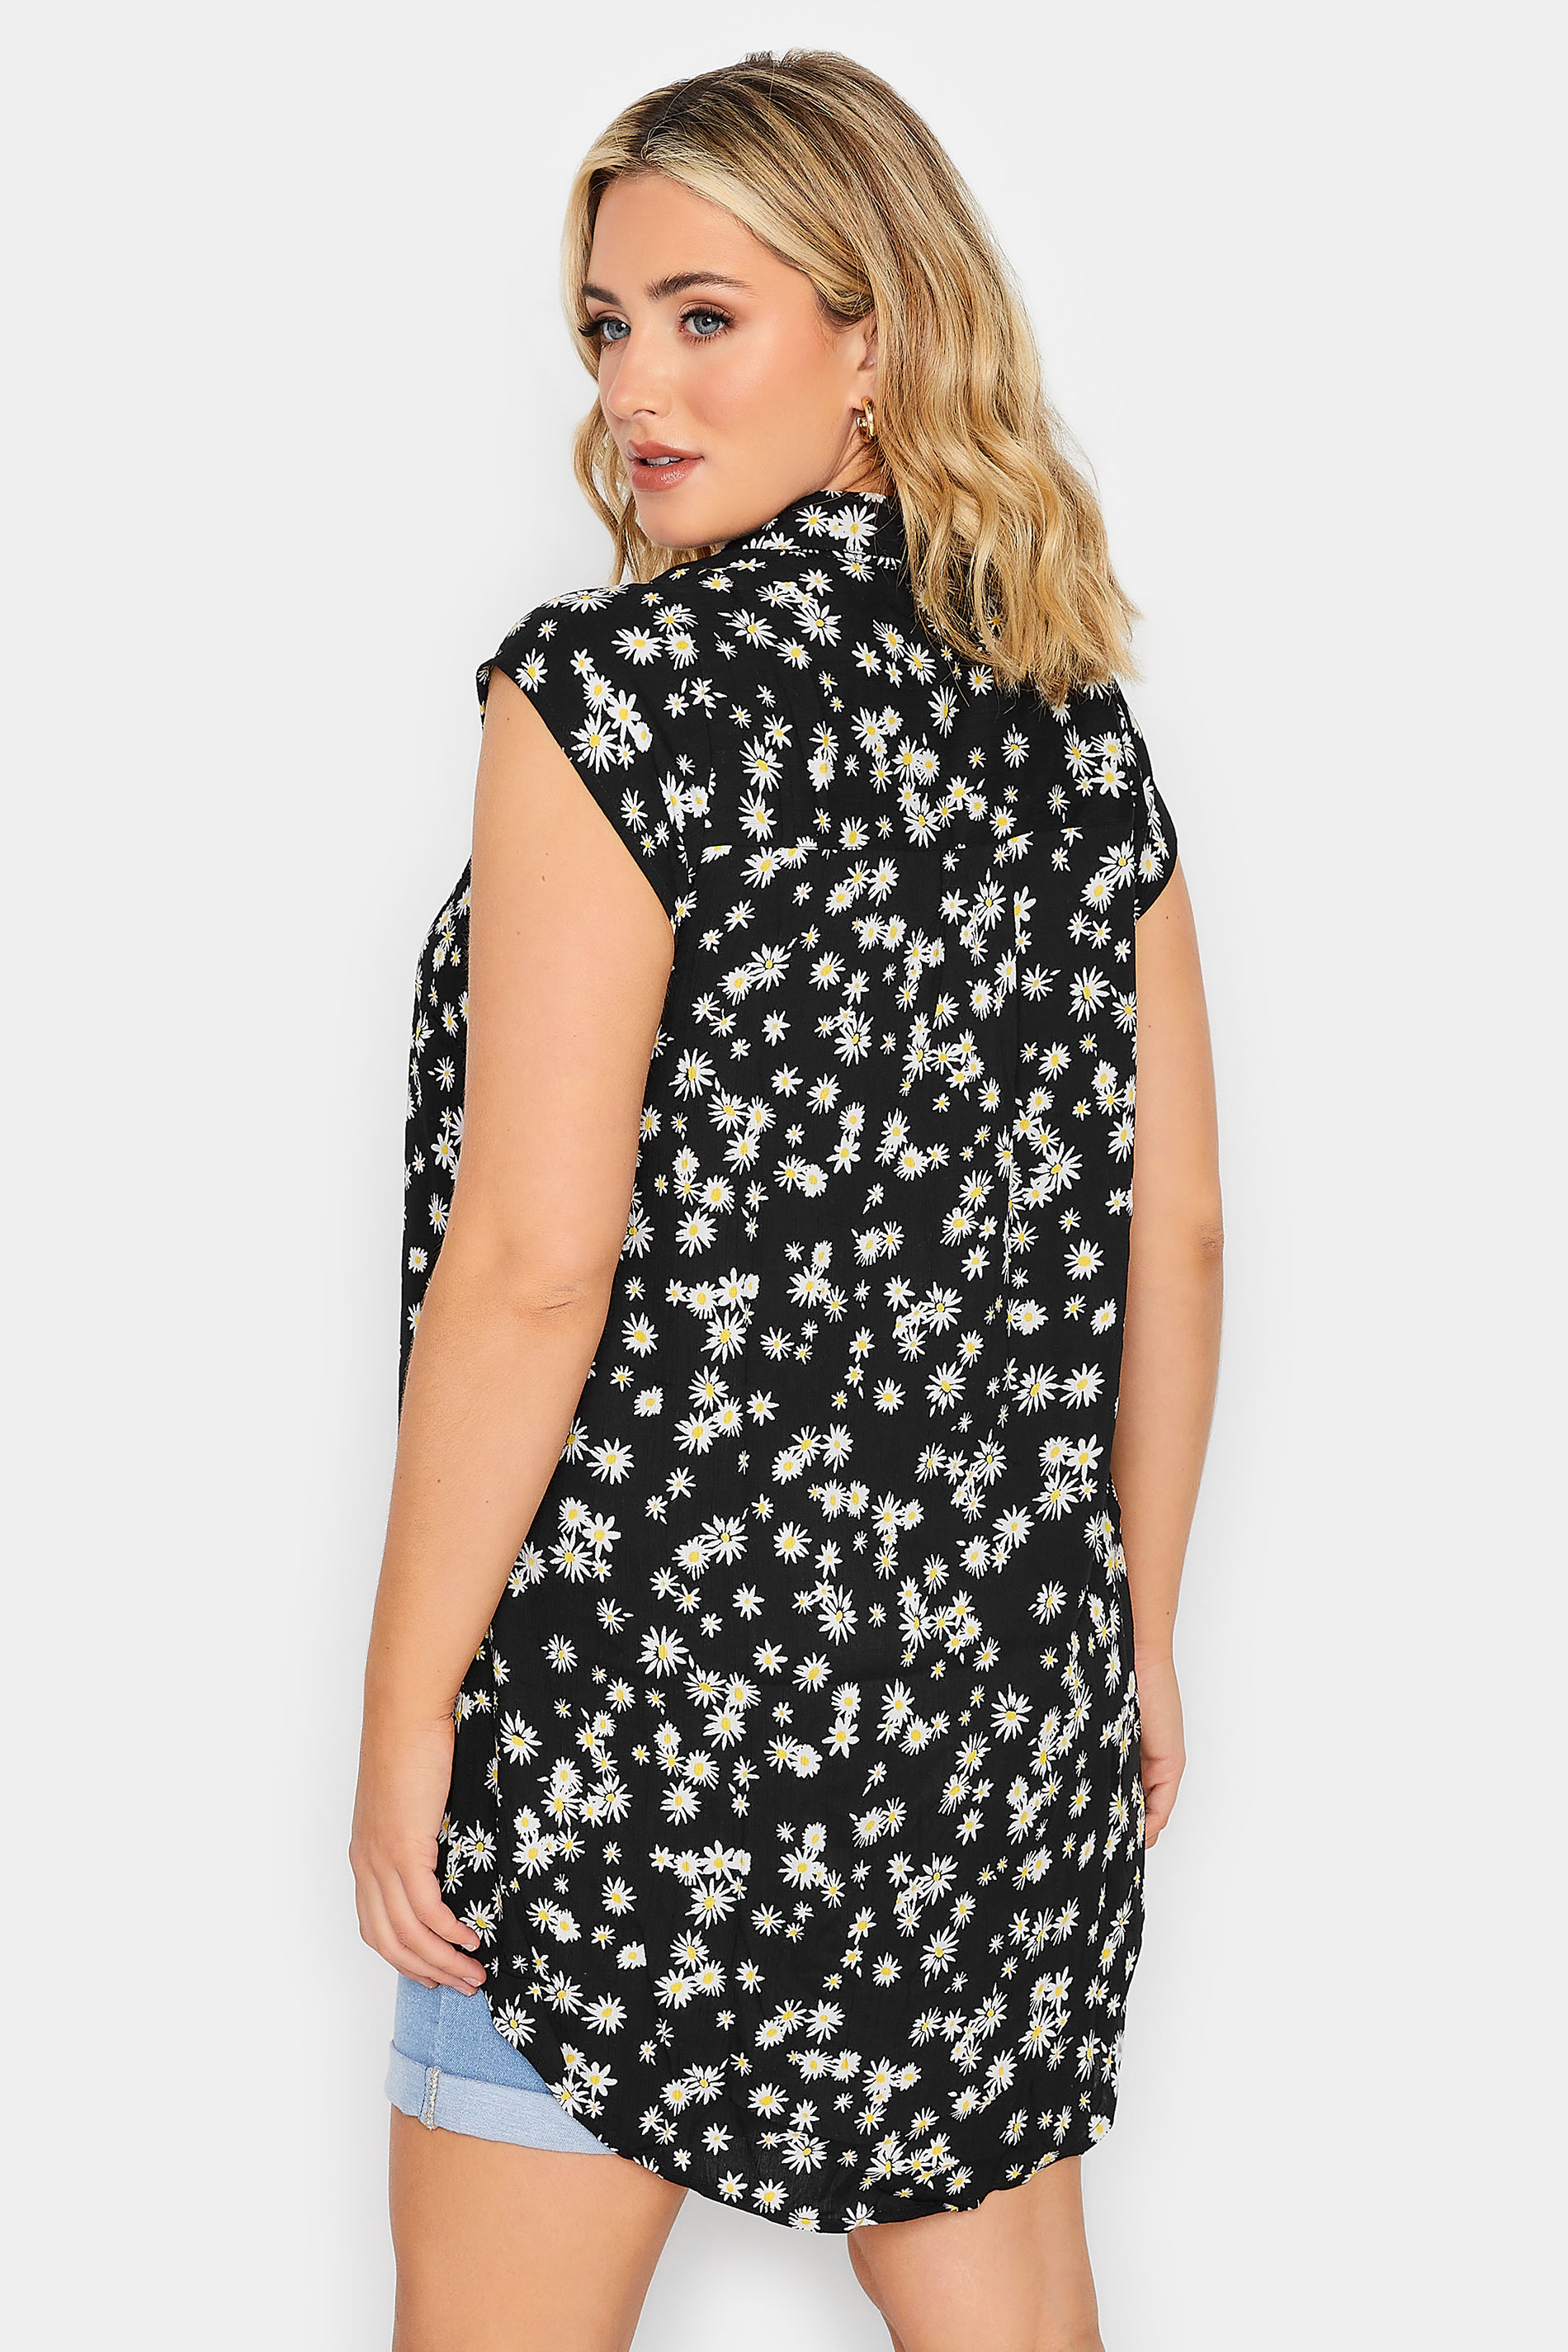 YOURS Plus Size Black Daisy Print Sleeveless Blouse | Yours Clothing 3